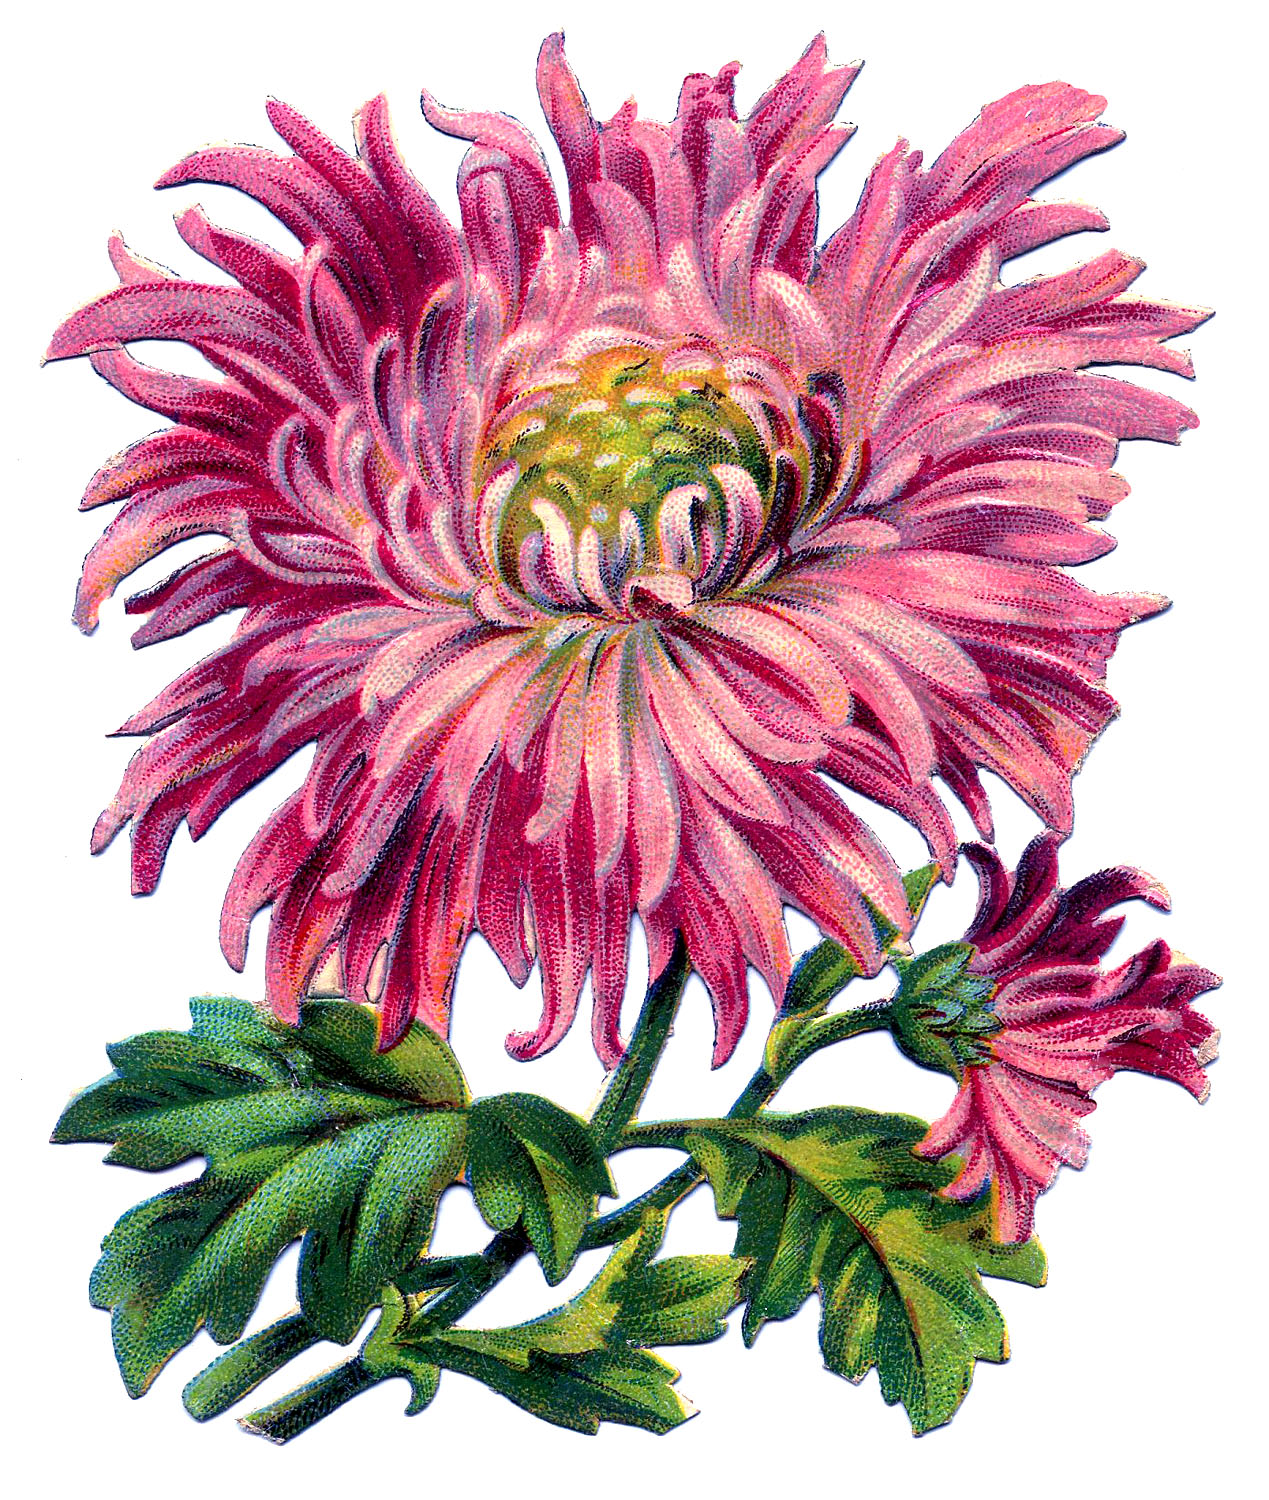 Vintage Image   Pink Chrysanthemum   The Graphics Fairy